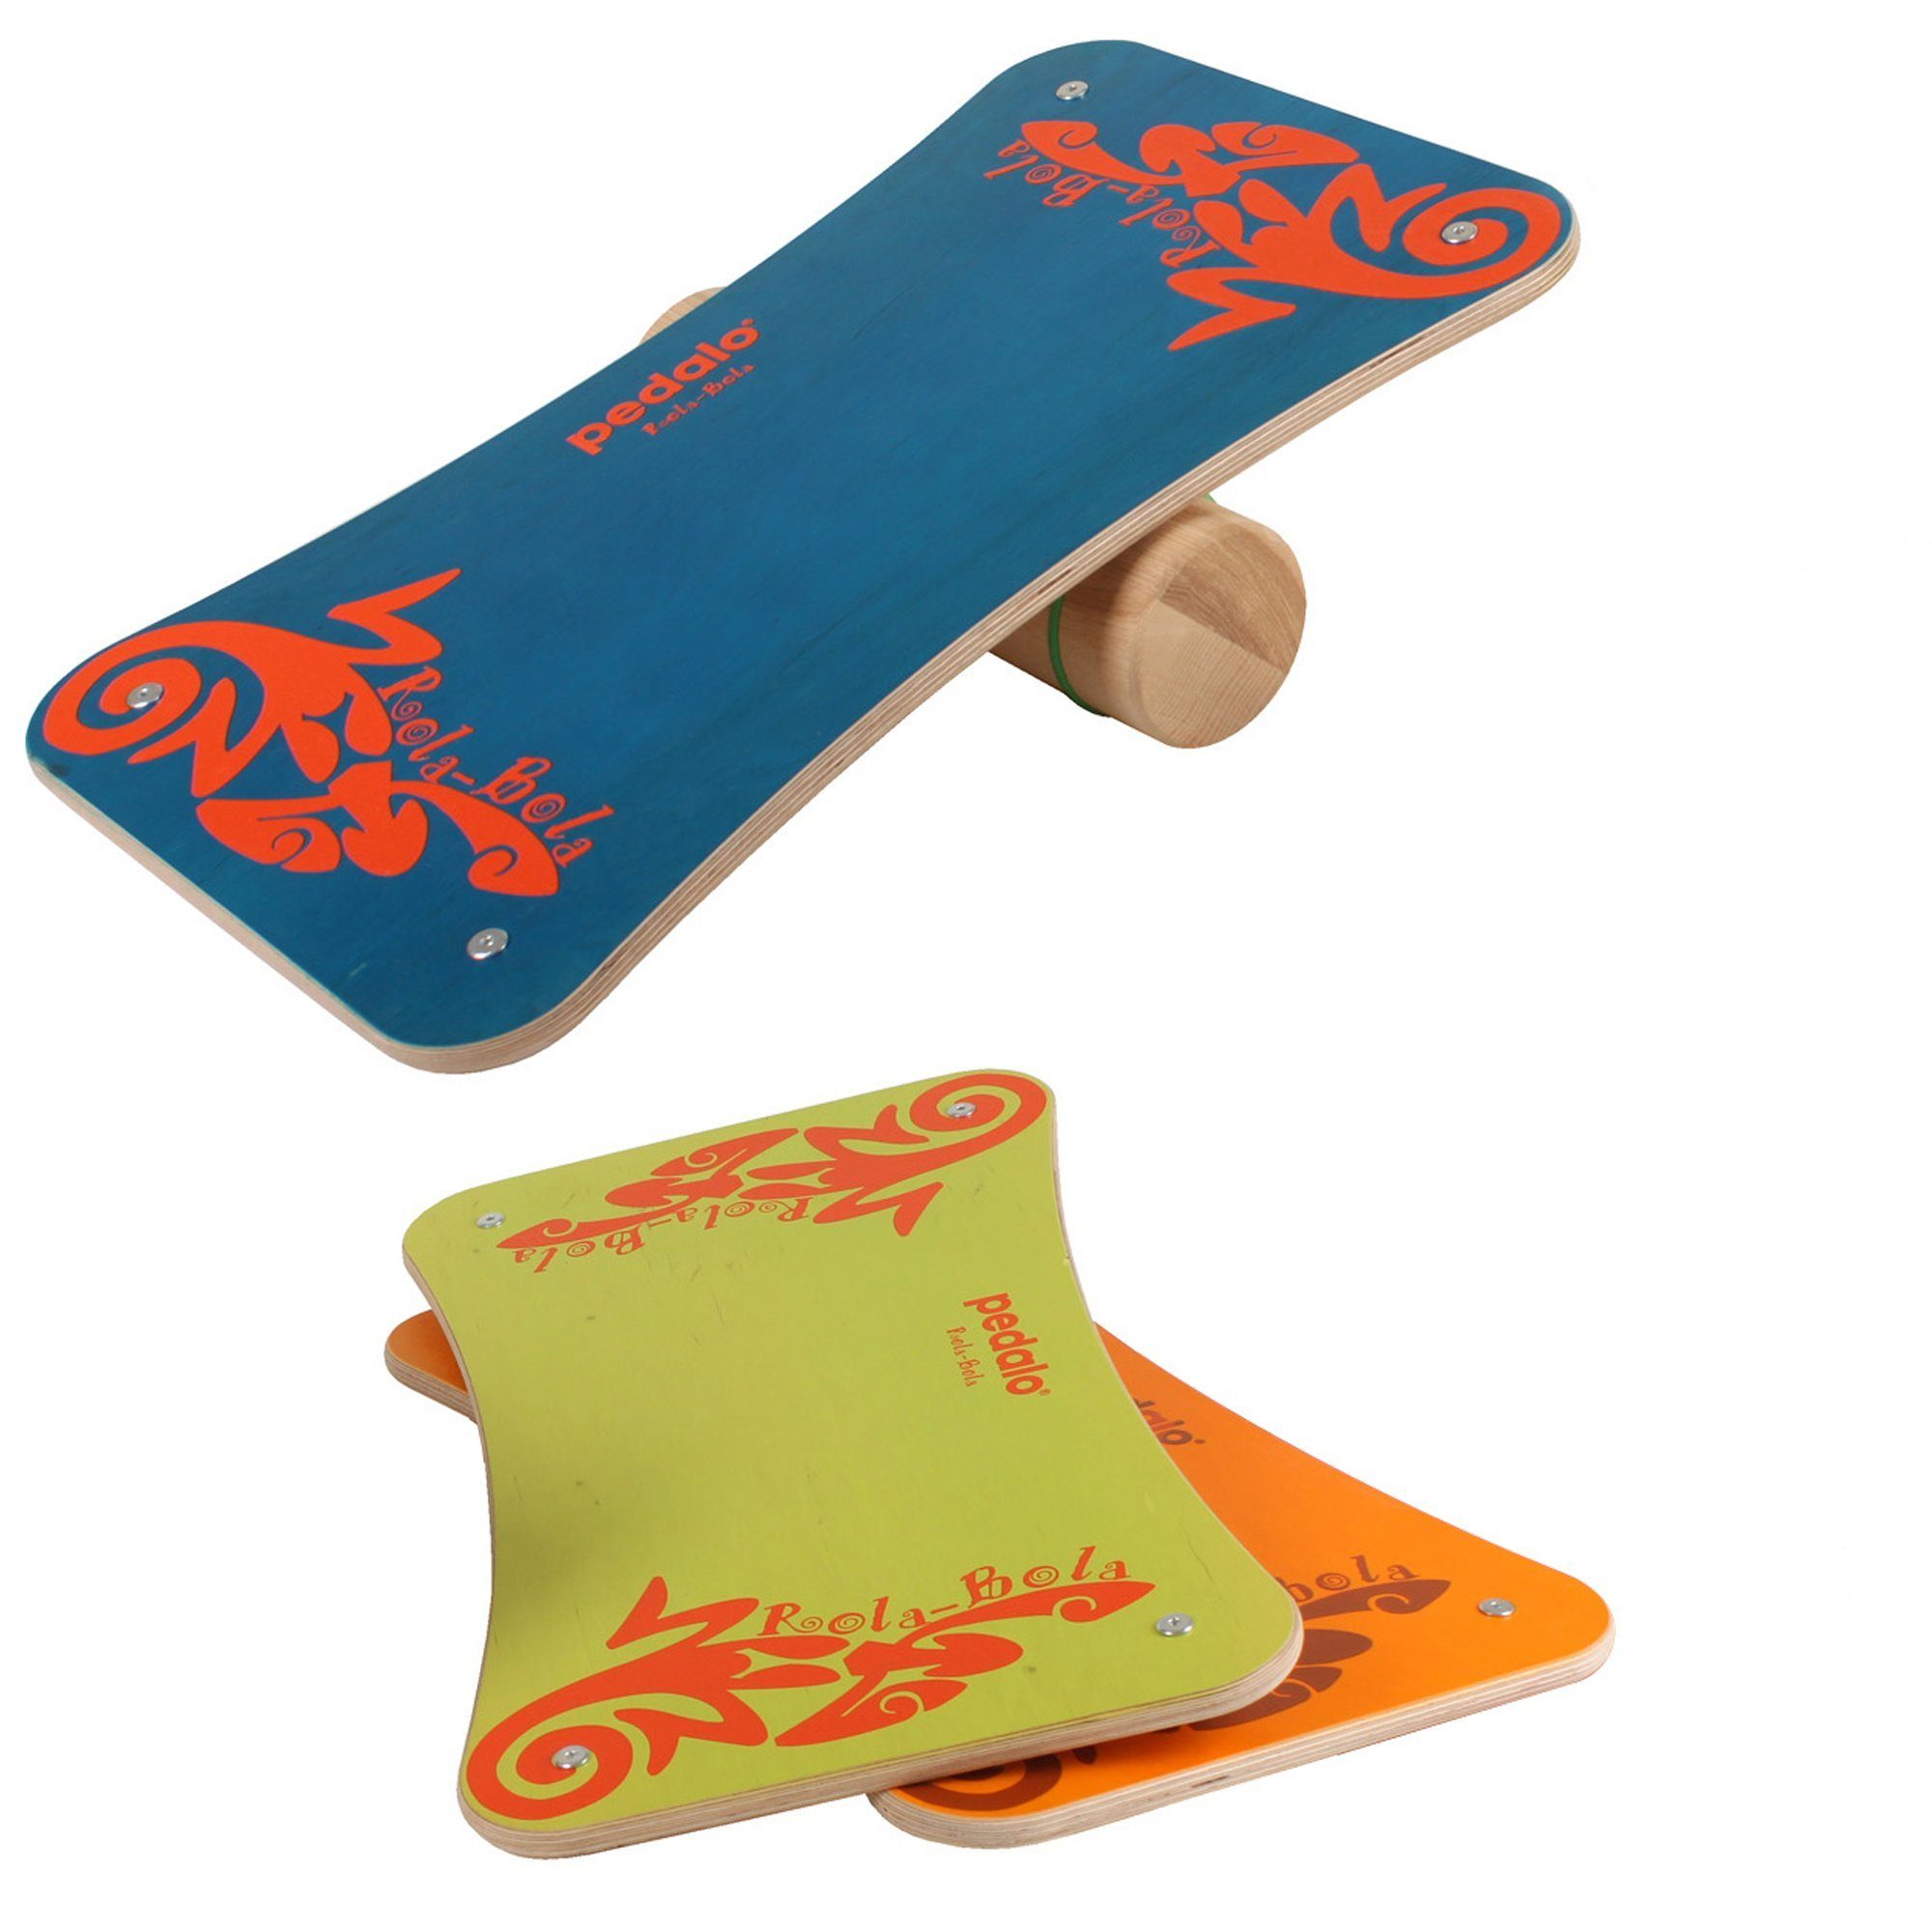 Reflextrainer Balanceboard, Pedalo Rola-Bola Balanceboard orange pedalo® Gleichgewichtstrainer,